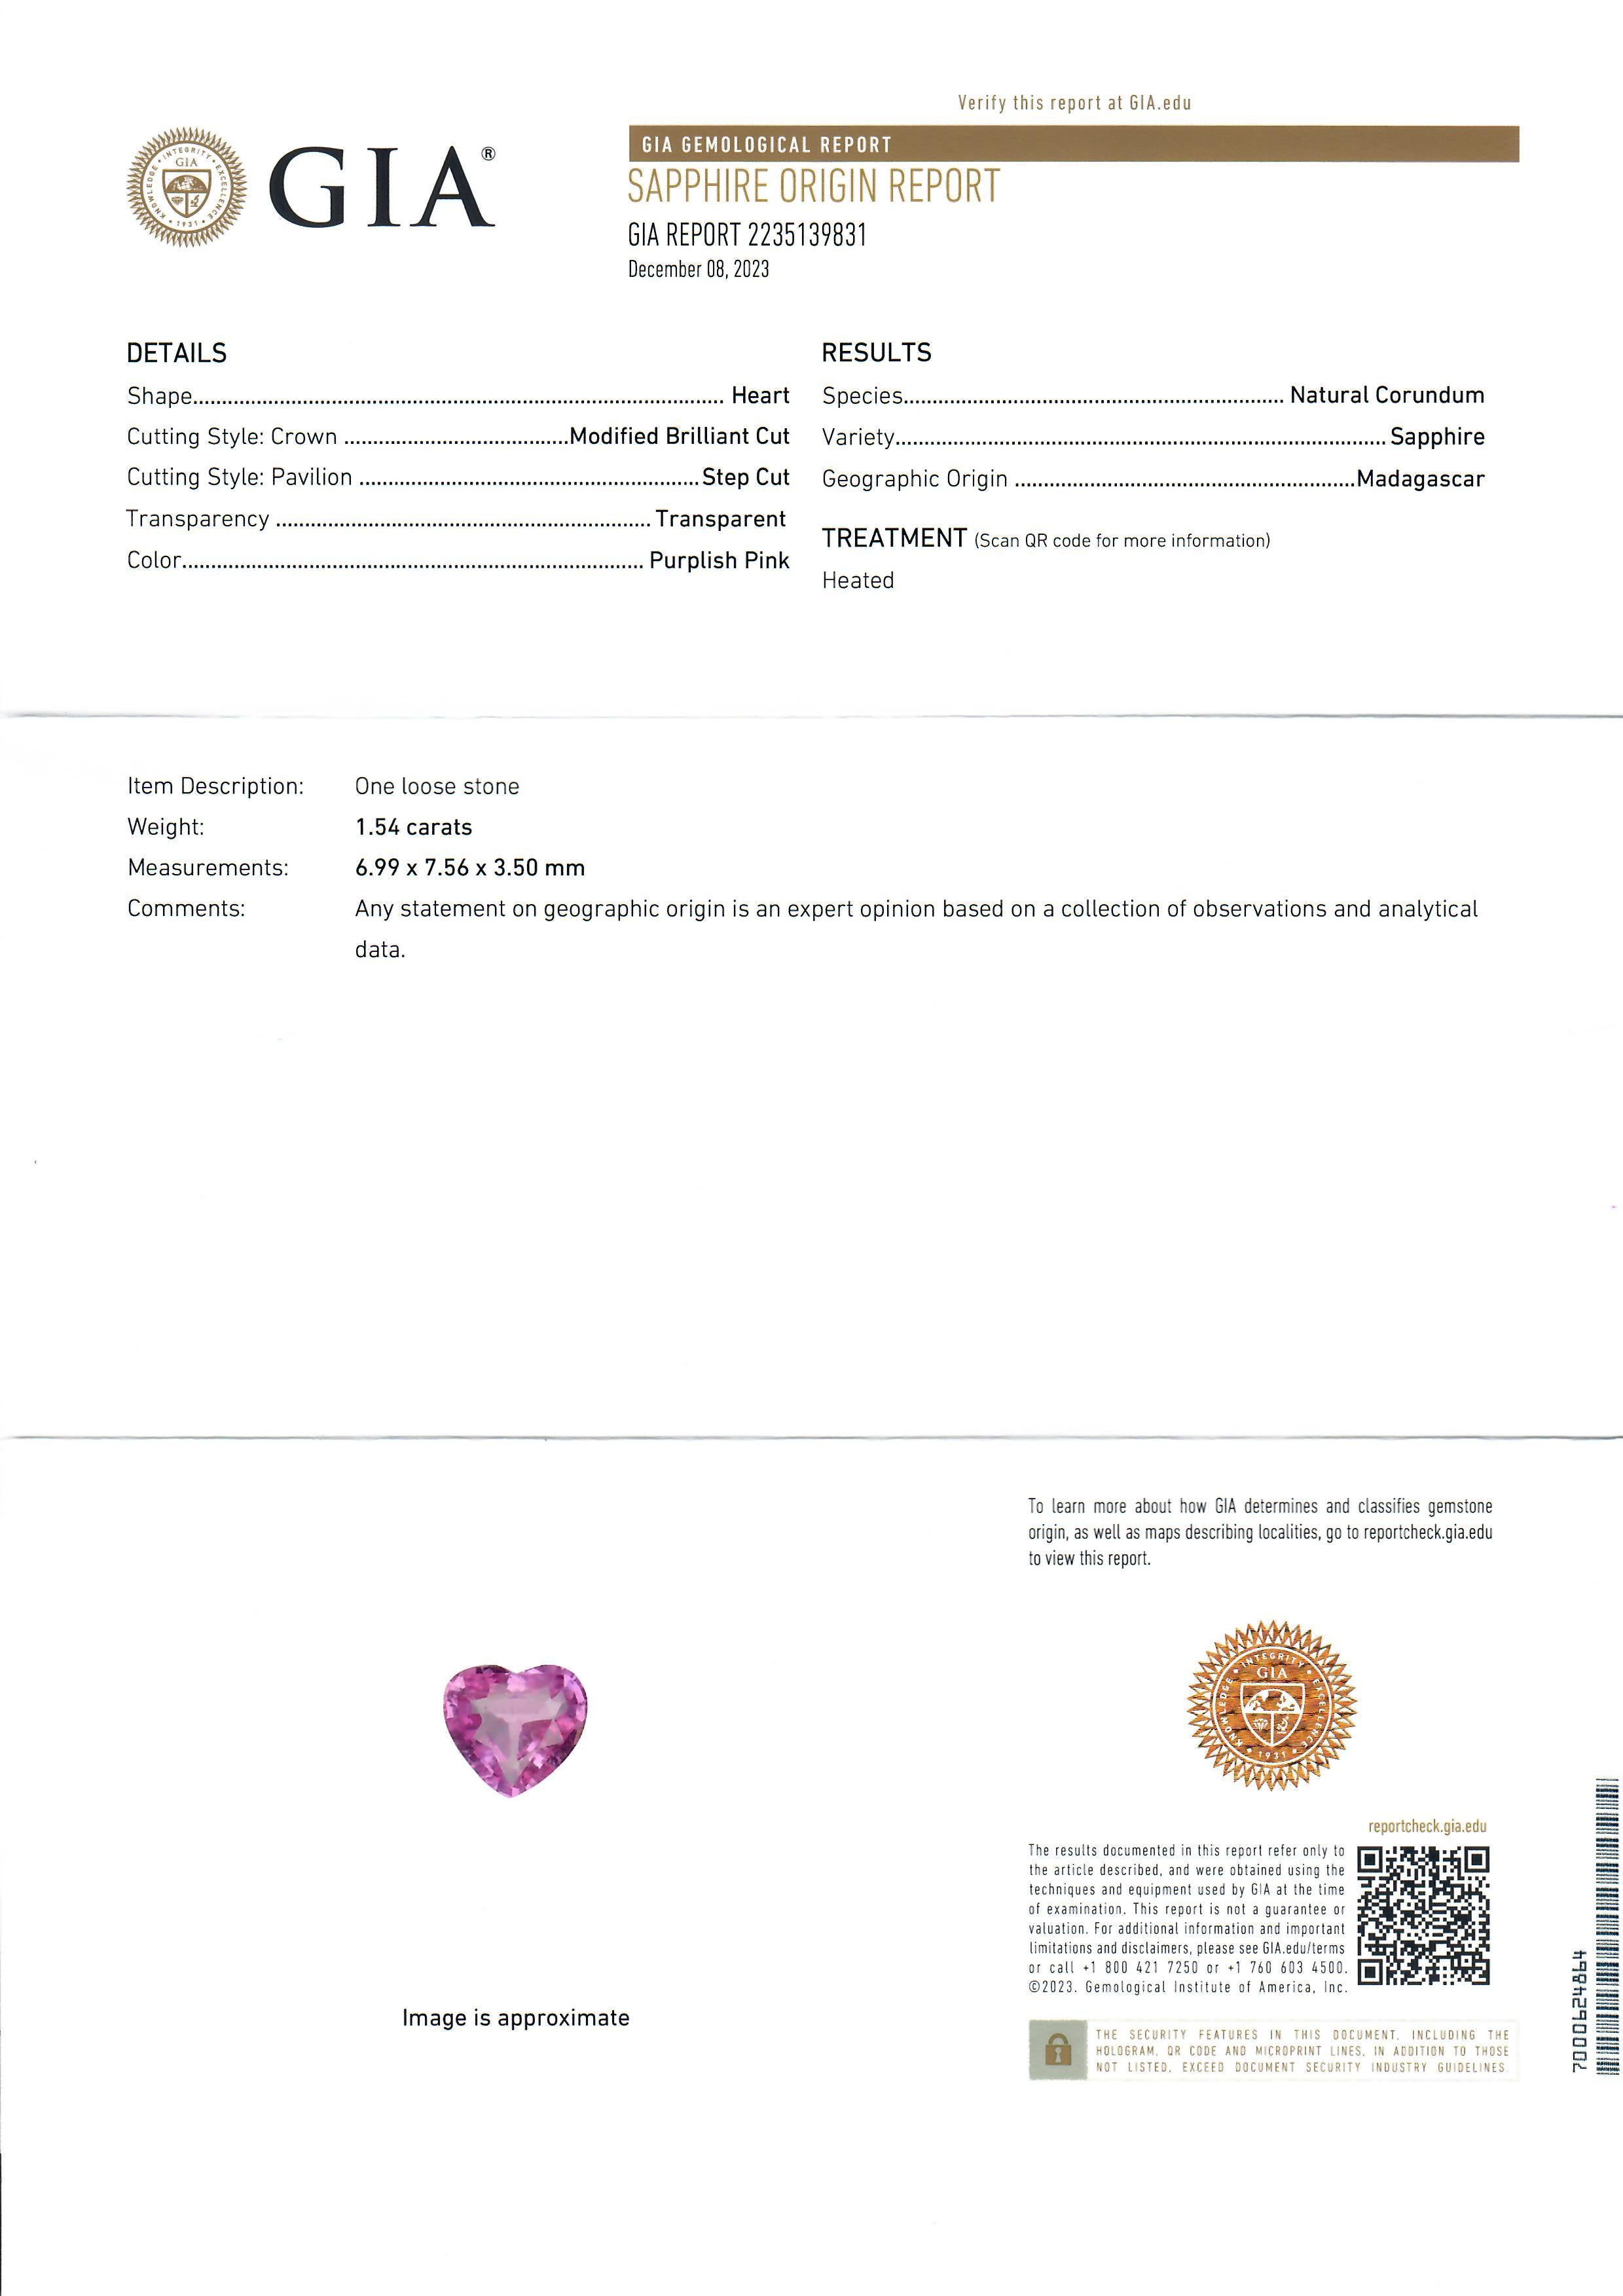 NEW Platinum 1.54ct GIA Heart Pink Sapphire Pendant Adjustable 16